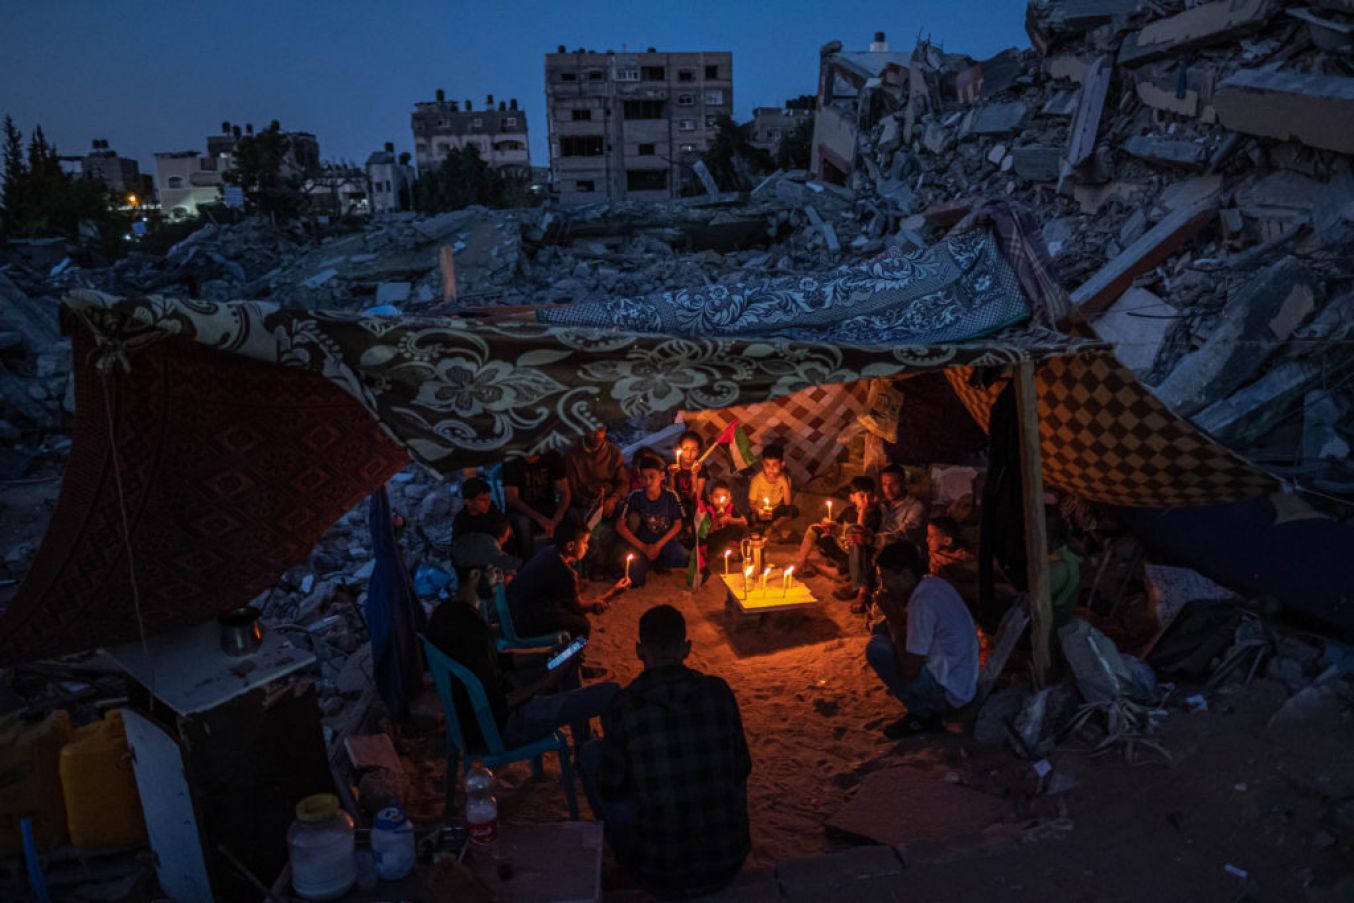 Palestinian Children In Gaza,
Fatima Shbair, Palestine, Getty Images